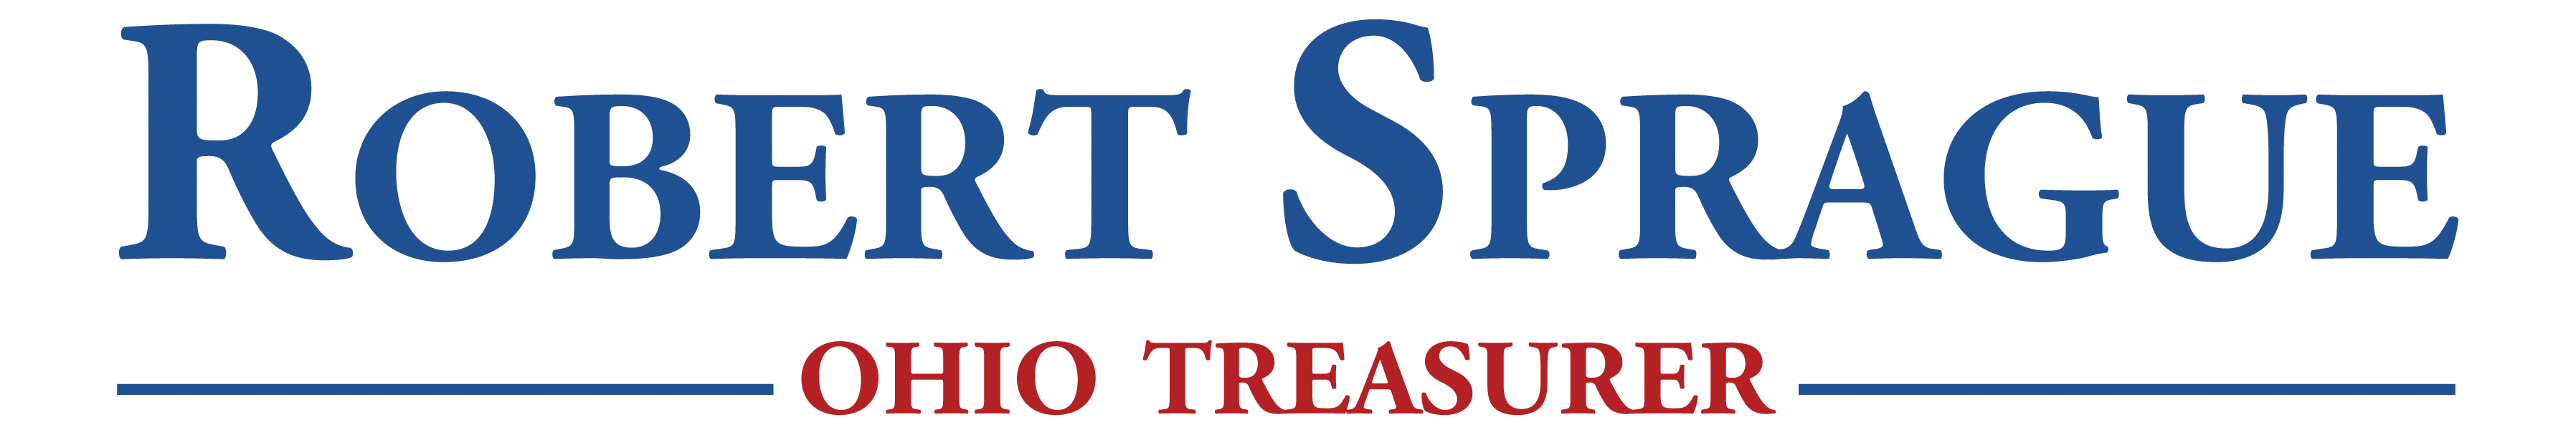 Ohio Transportation Bond Programs - Official Seal or Logo